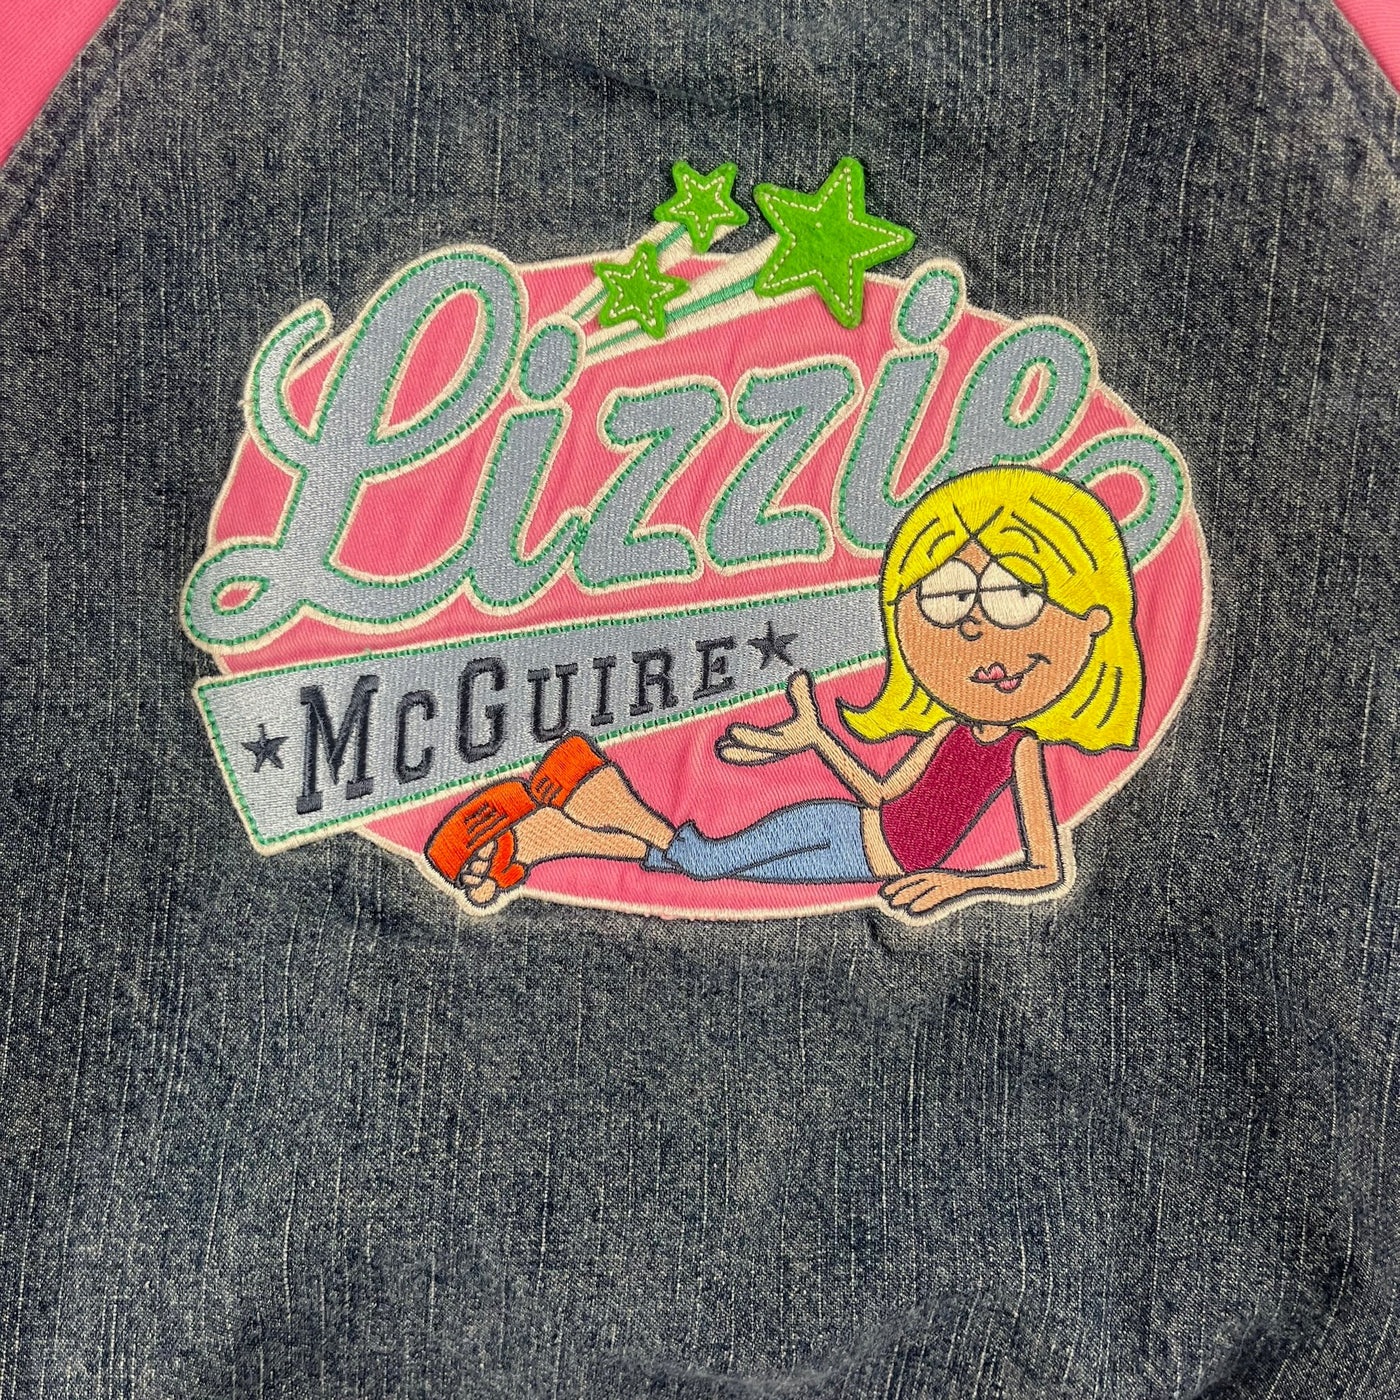 Vintage Lizzie McGuire Jacket 5/6T